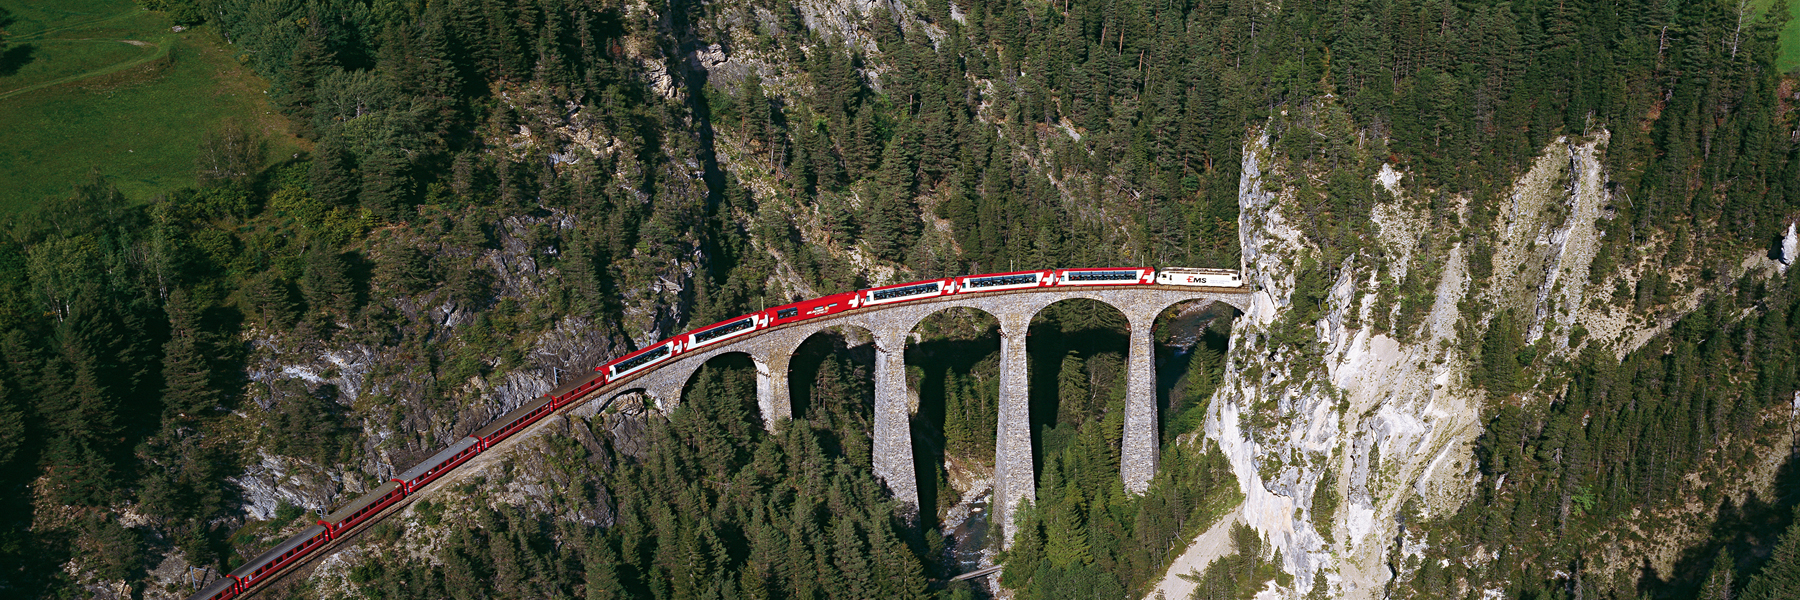 Glacier-Express, Landwasser Viaduct